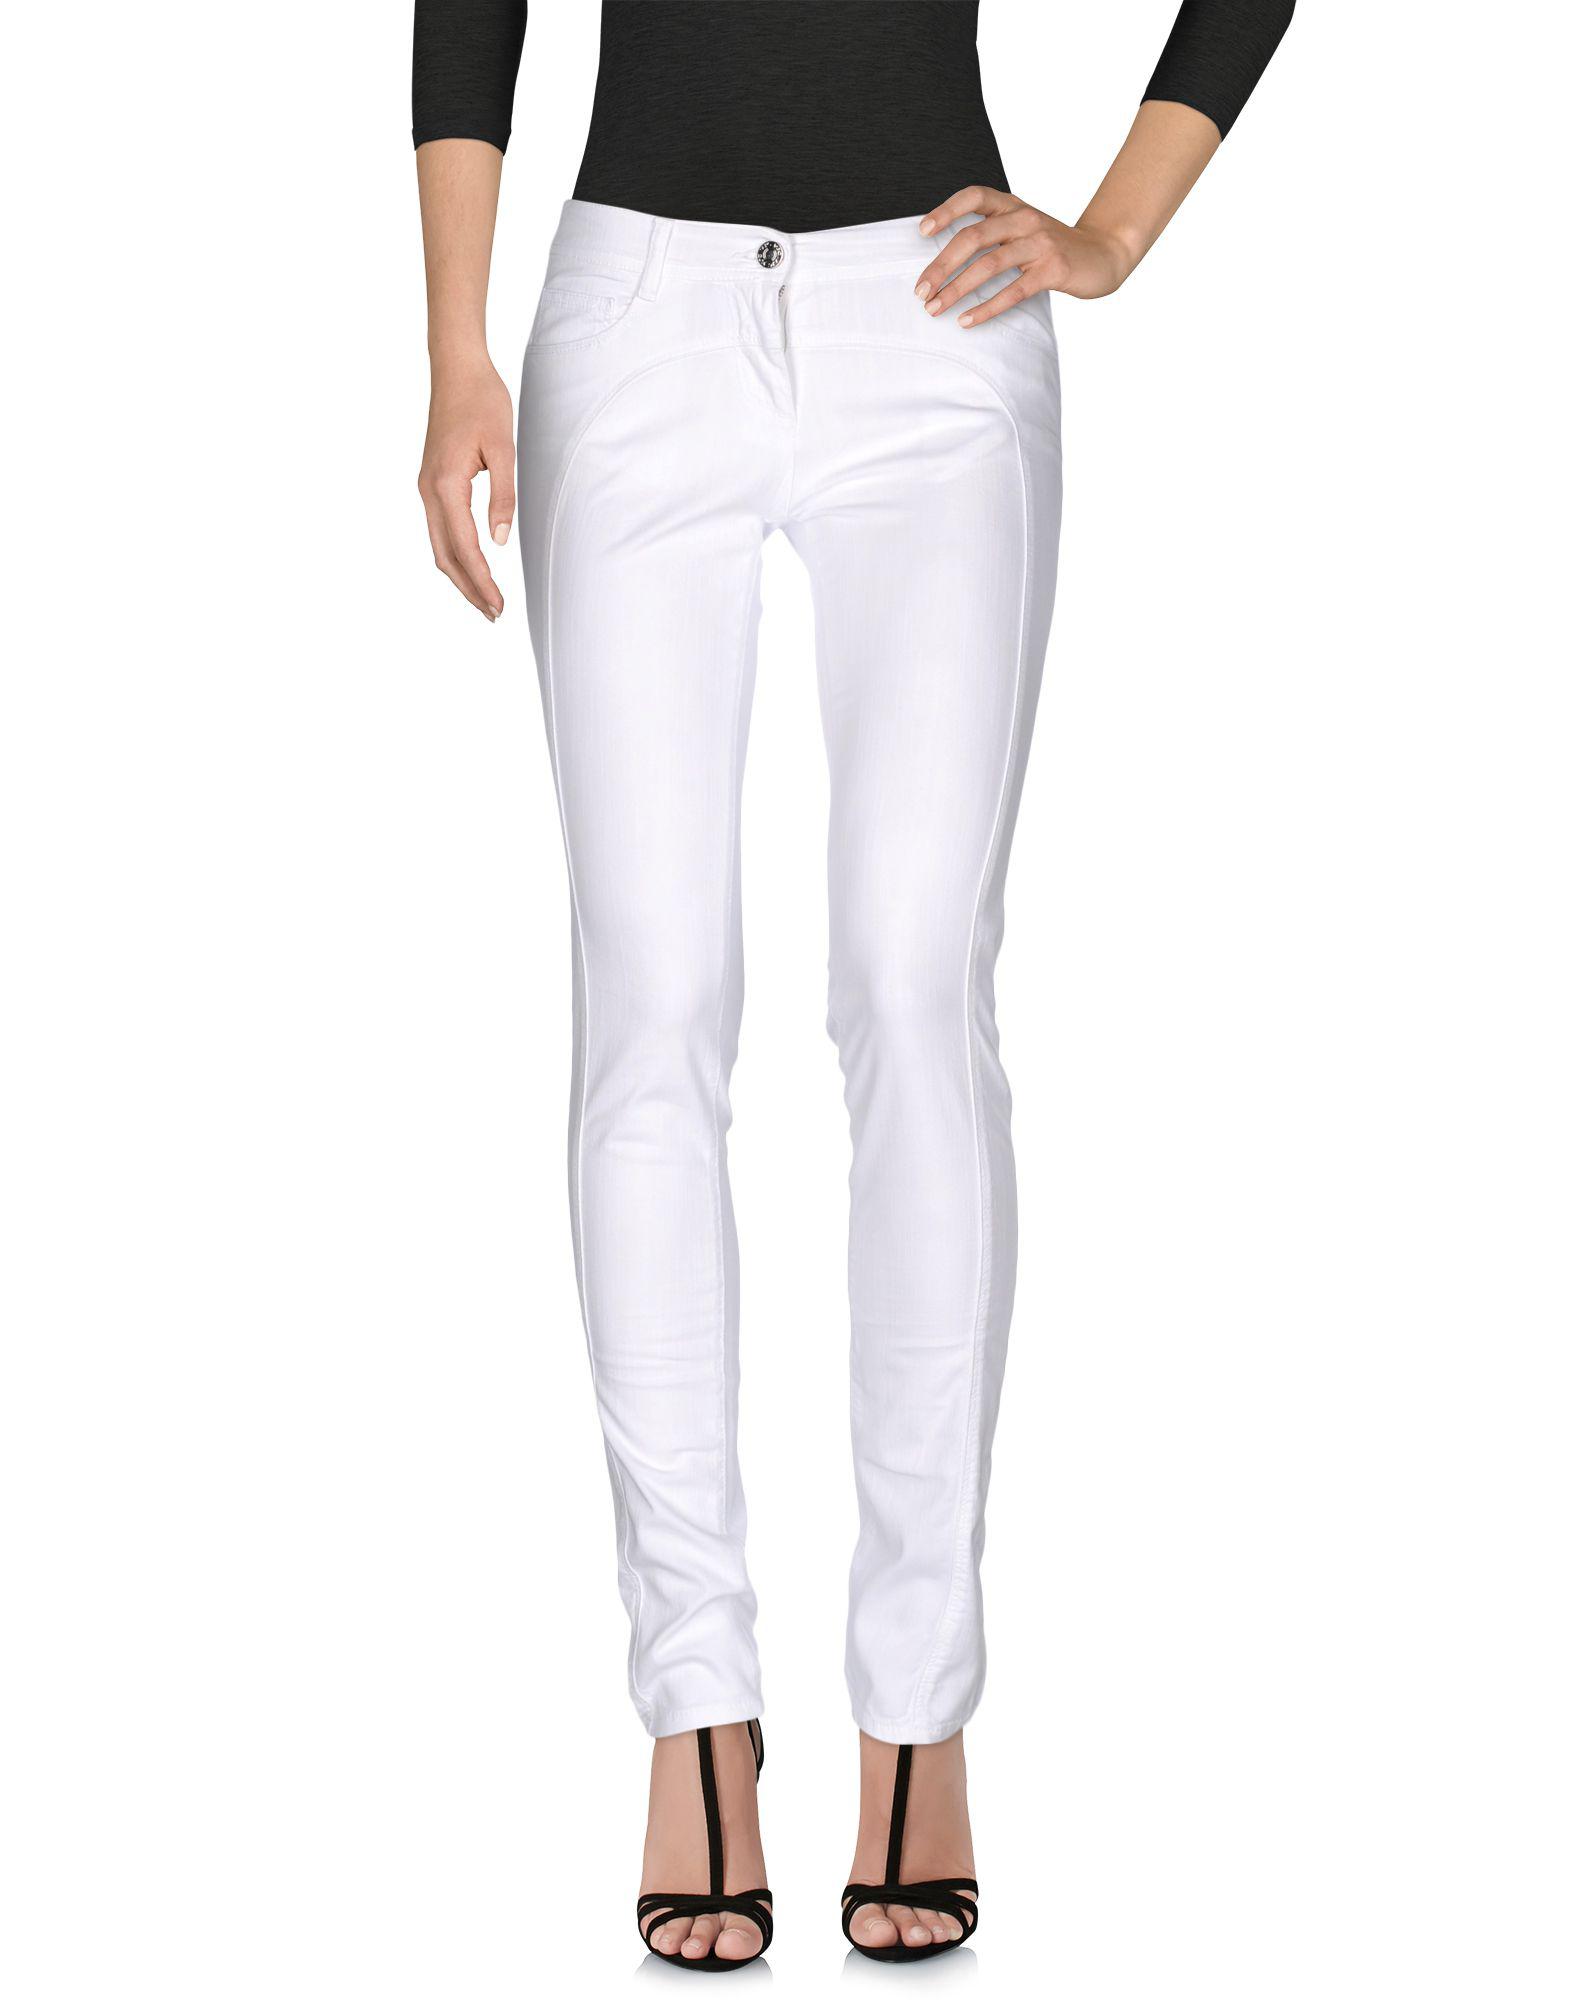 Versace Jeans Denim Pants in White (Black) - Lyst